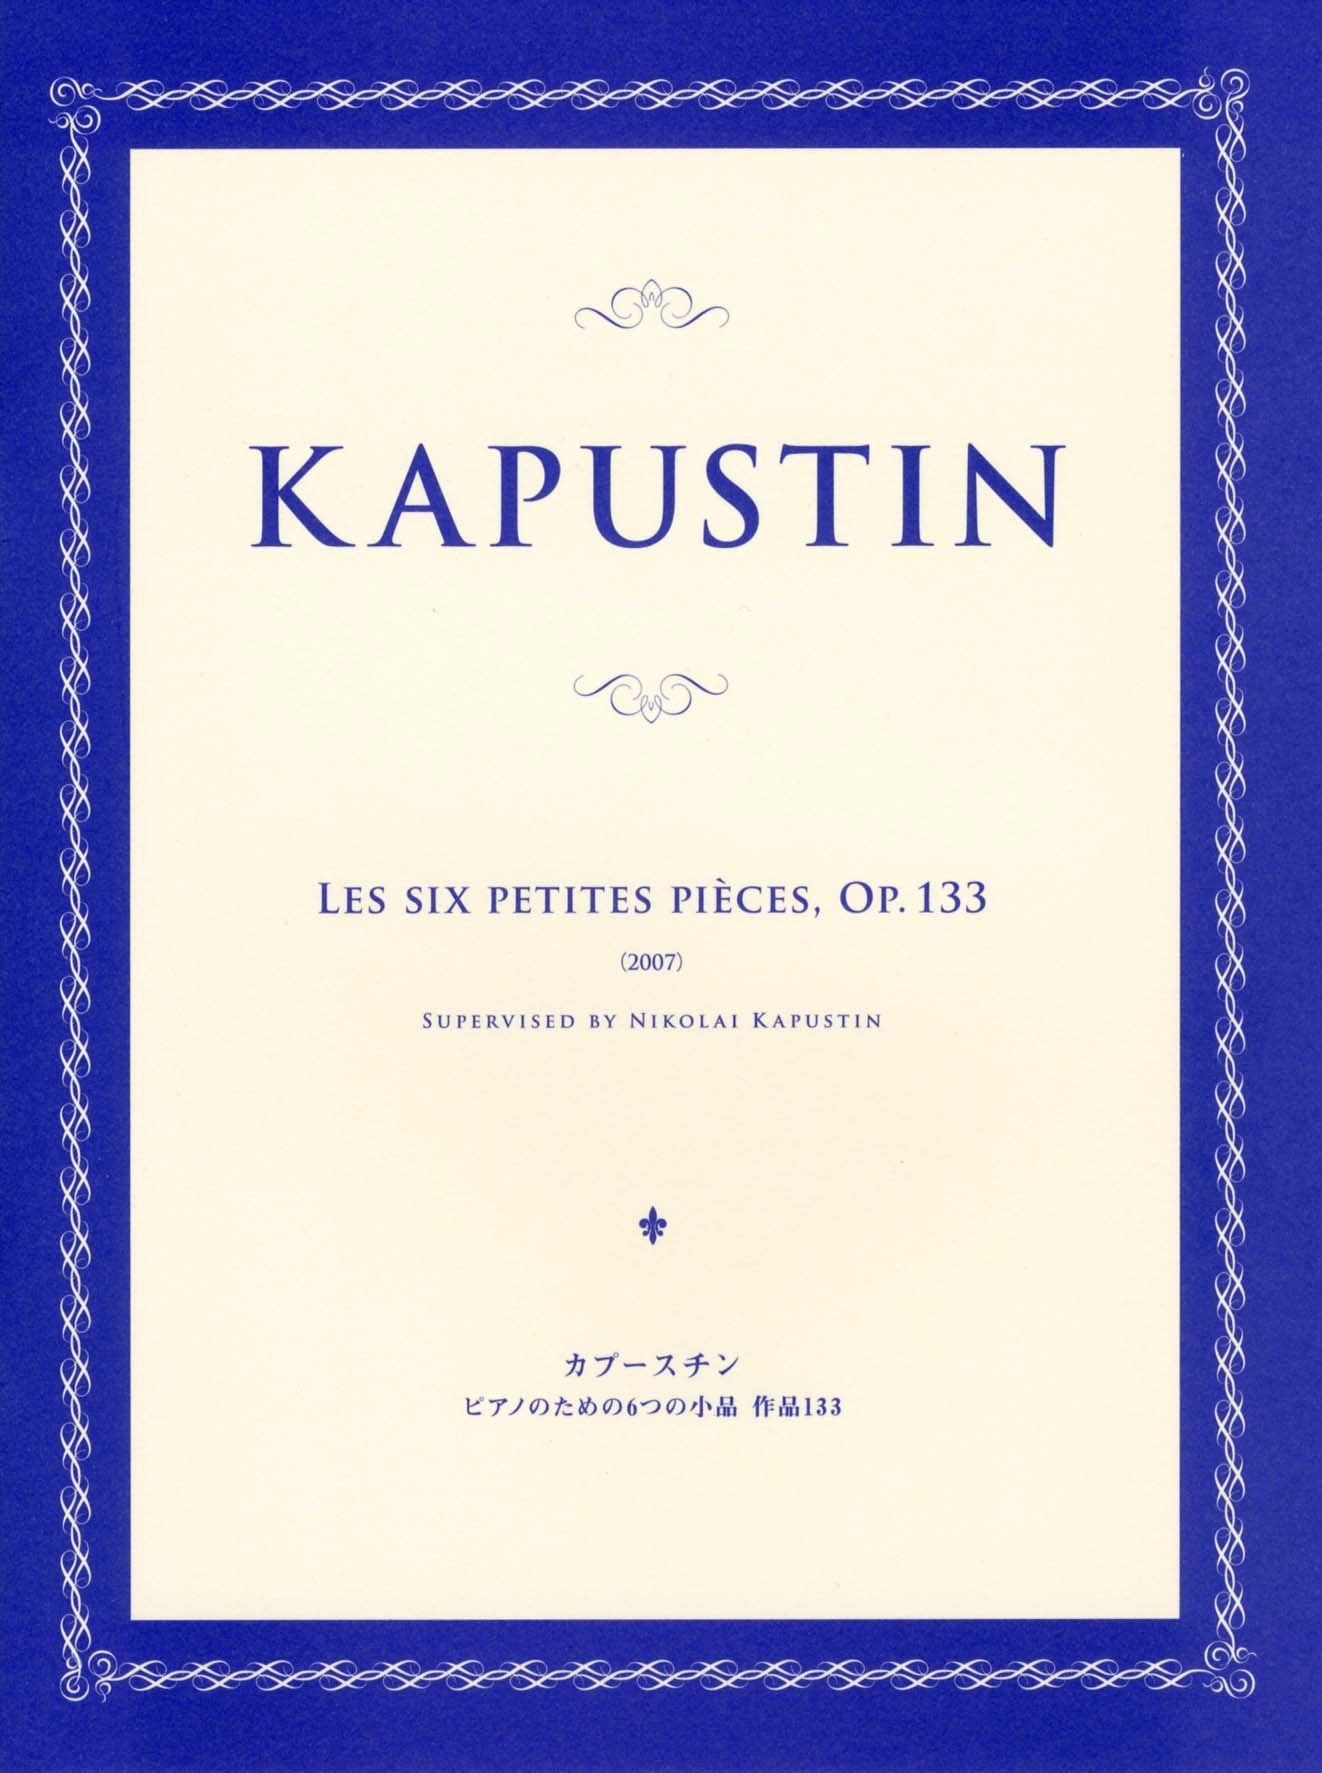 Kapustin: Les six petites pièces, Op. 133